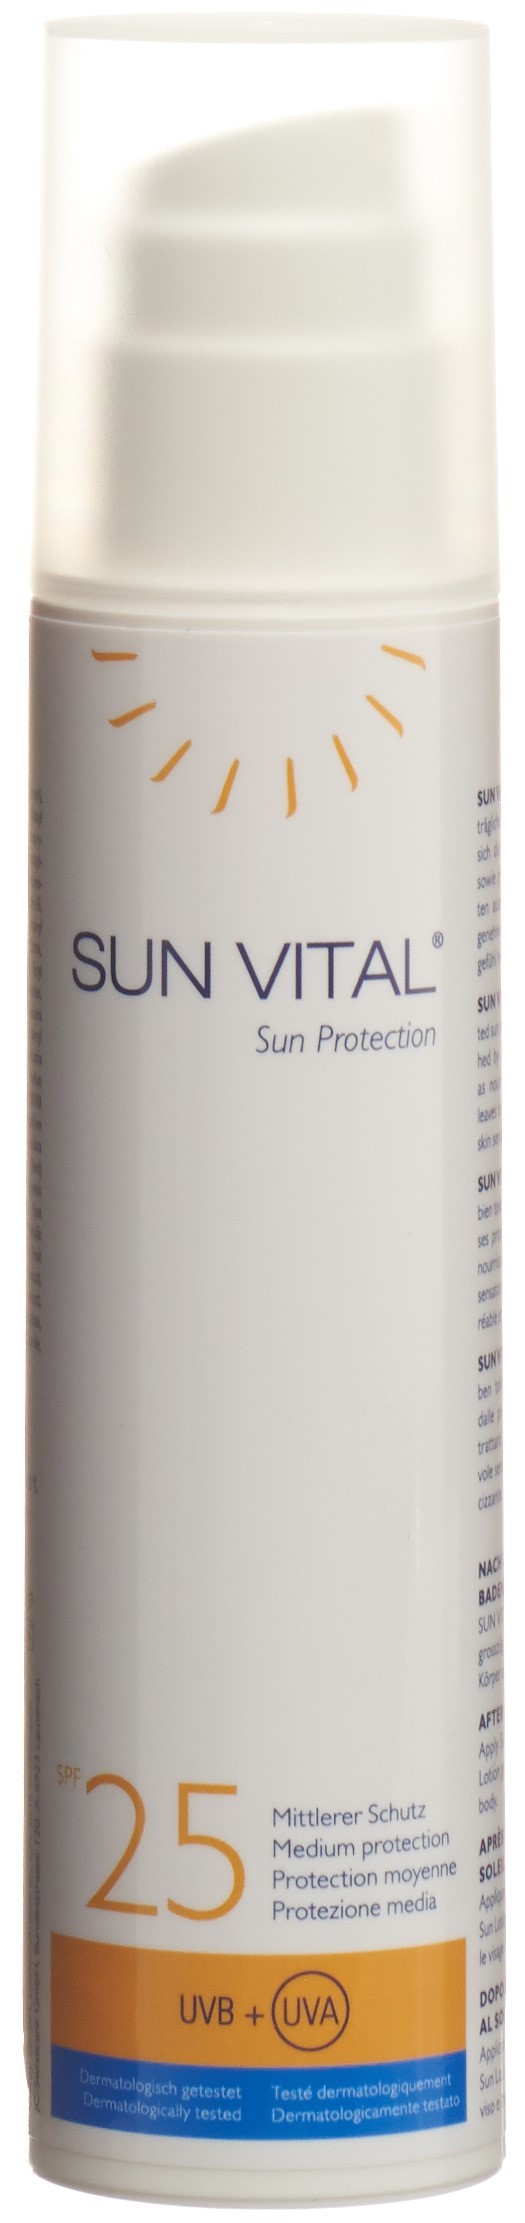 SUN VITAL Sun Protection 200 ml